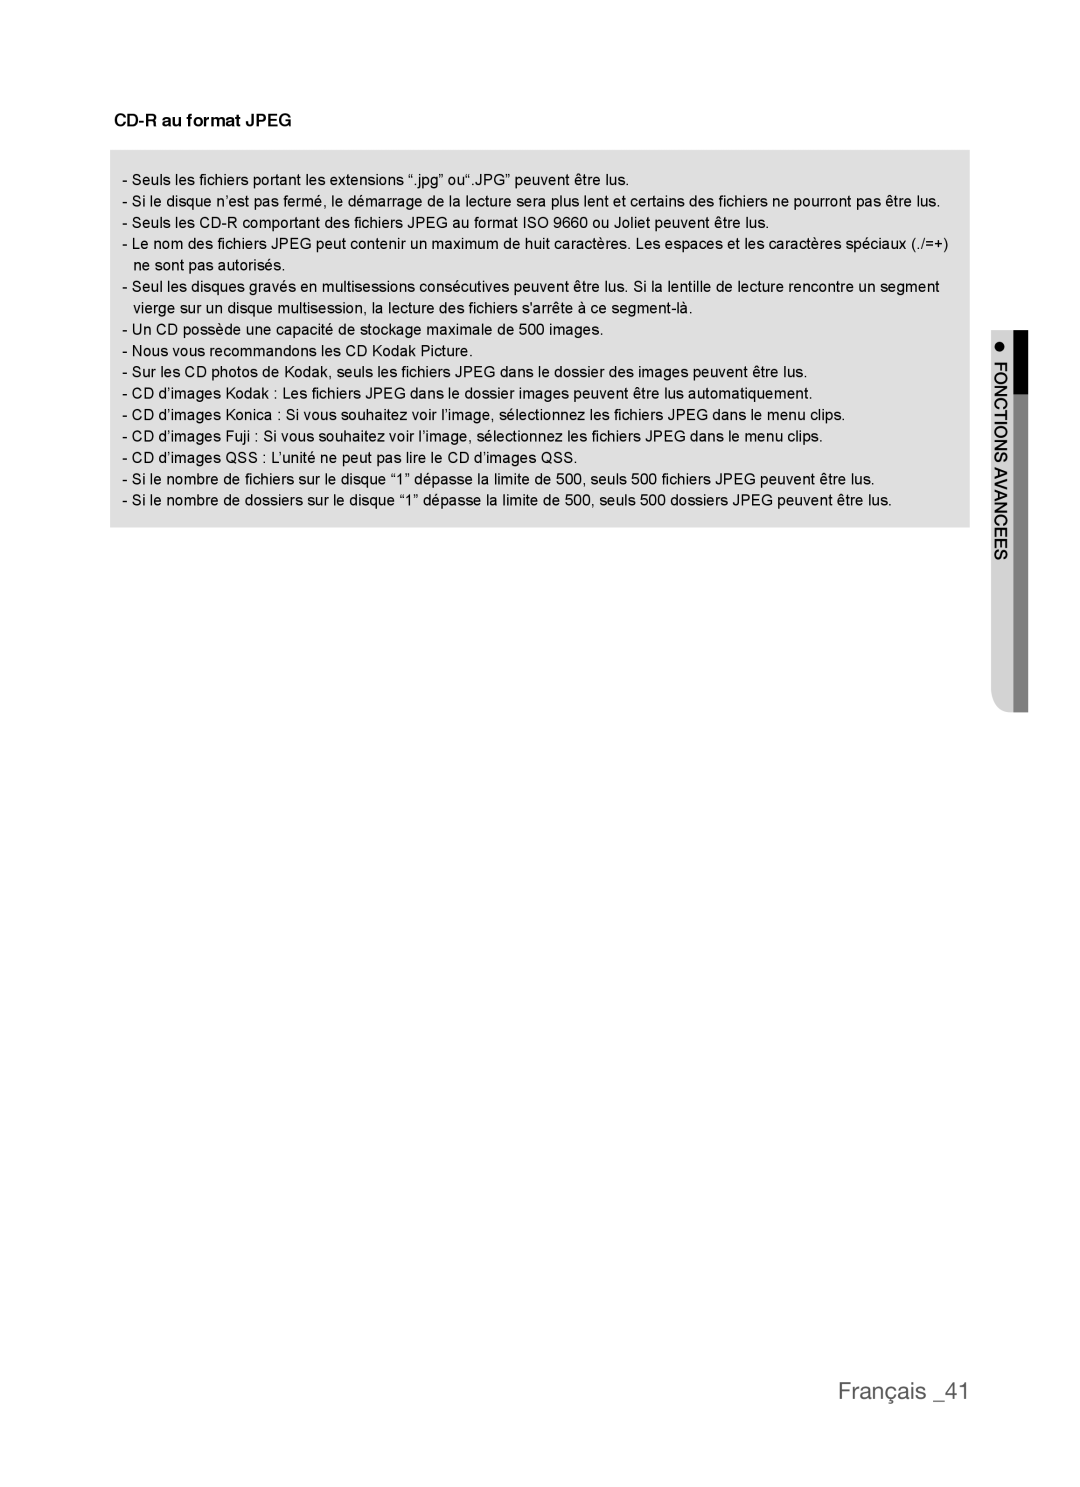 Samsung AK68-01770G, DVD-P390 user manual Français, CD-R au format JPEG 